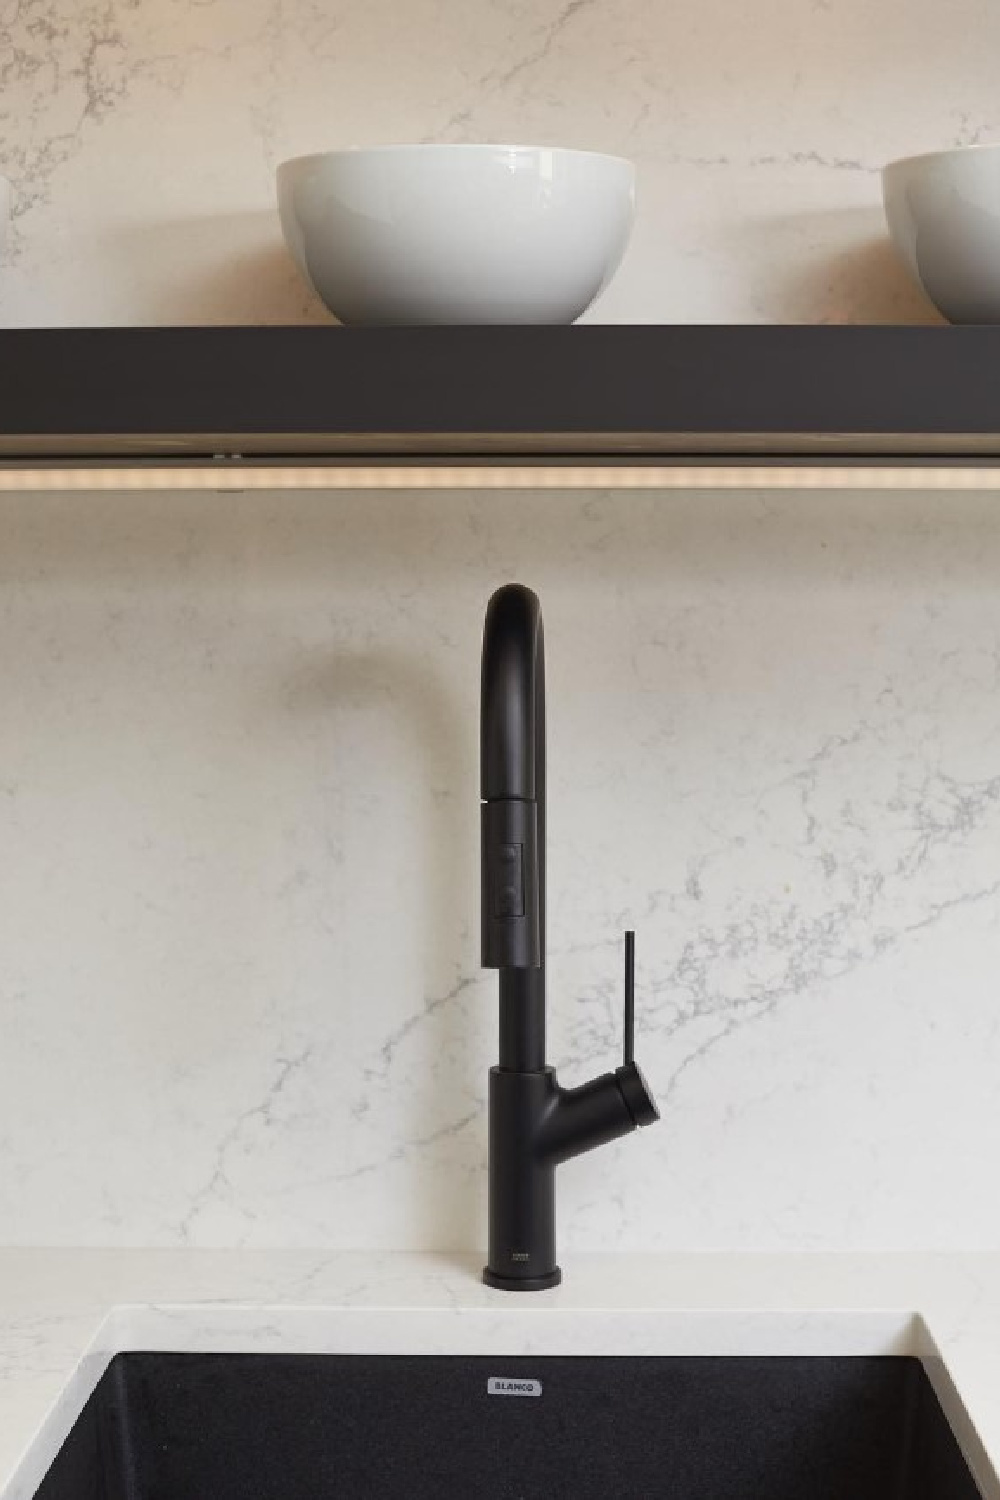 Muse quartz (Viatera) counters and backsplash in a kitchen - @designsby_ks. #musequartz #quartzcounters